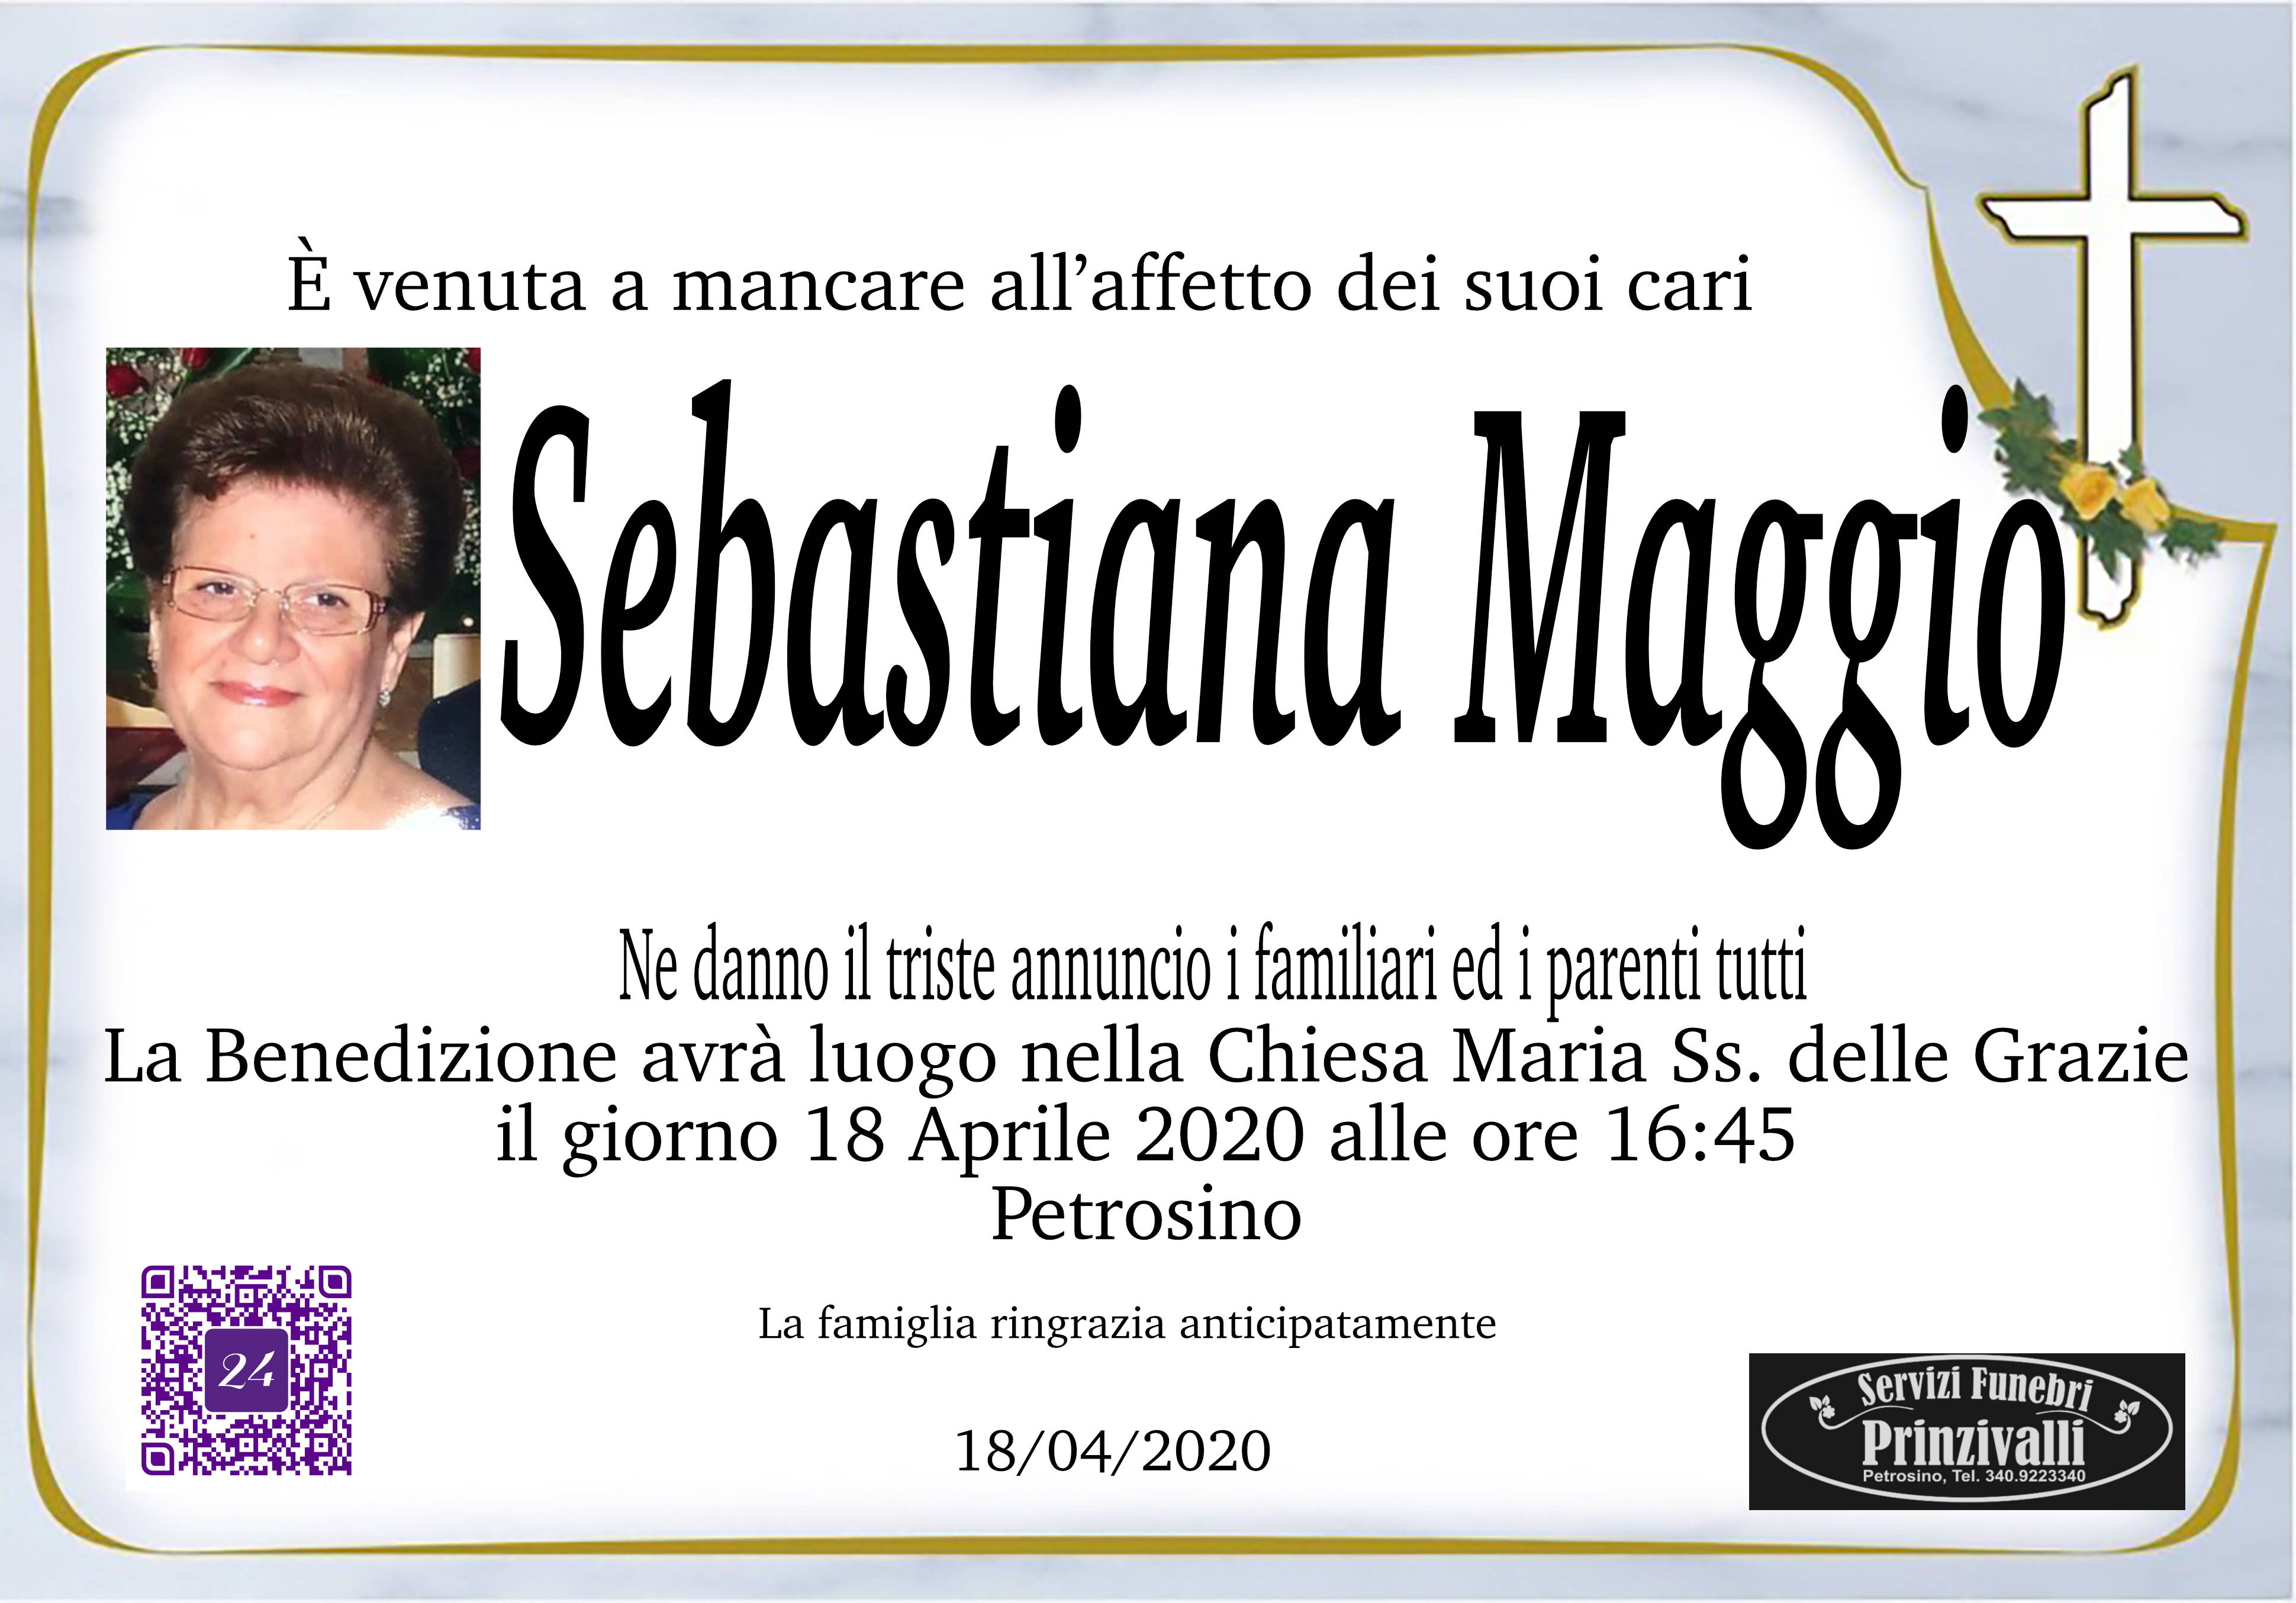 Sebastiana Maggio